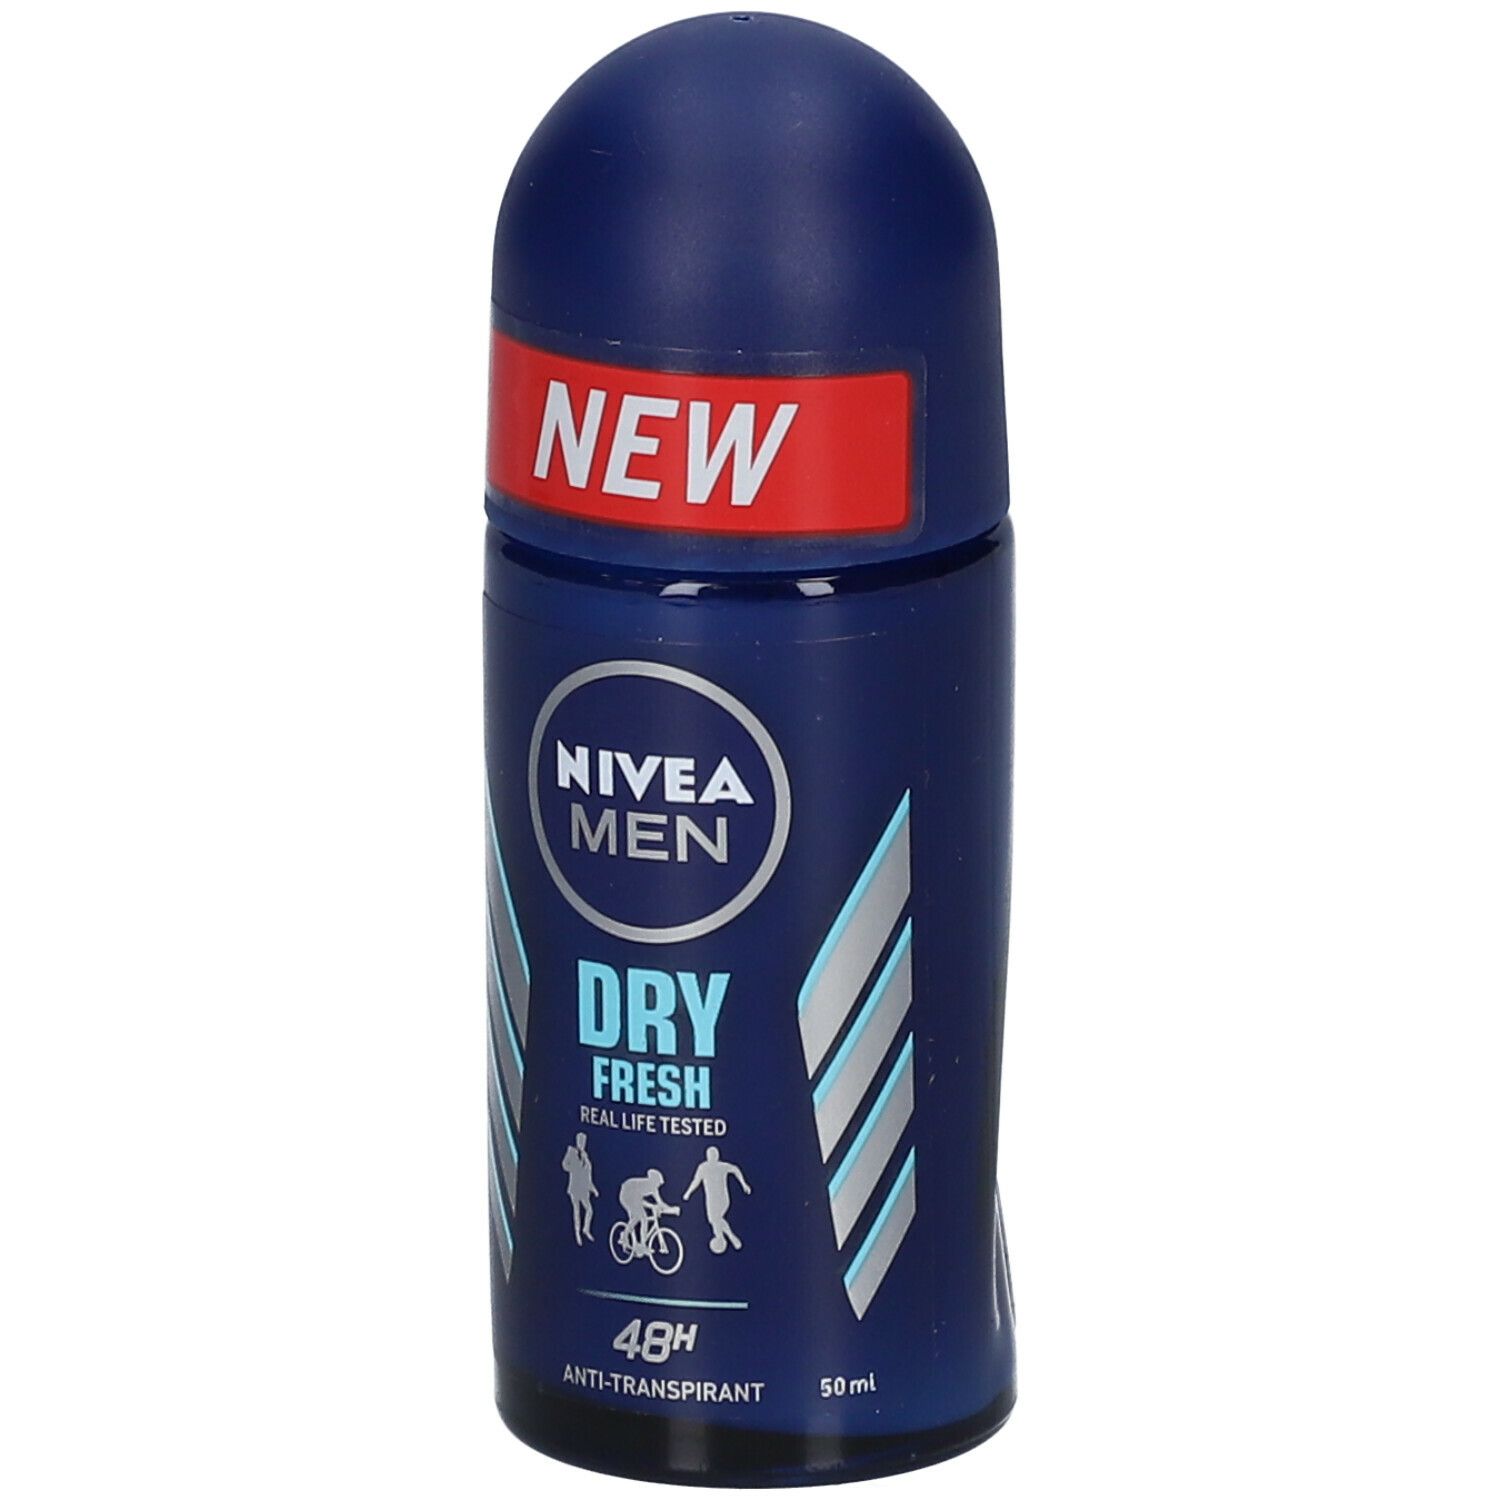 Nivea Men Dry Fresh Roll-On